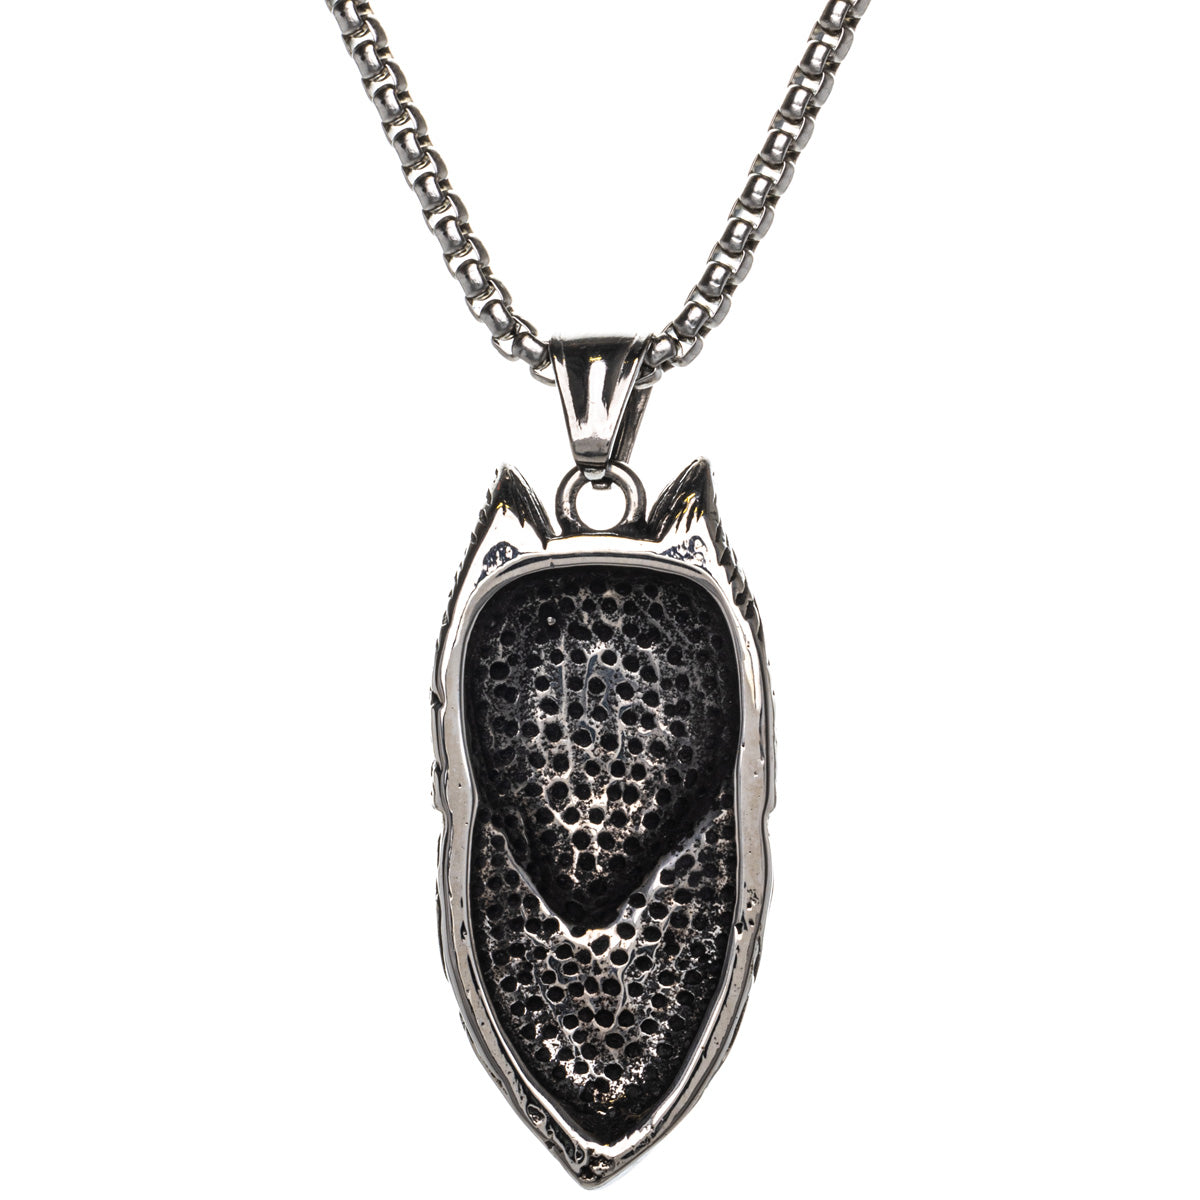 Shaman wolf pendant necklace (Steel 316L)